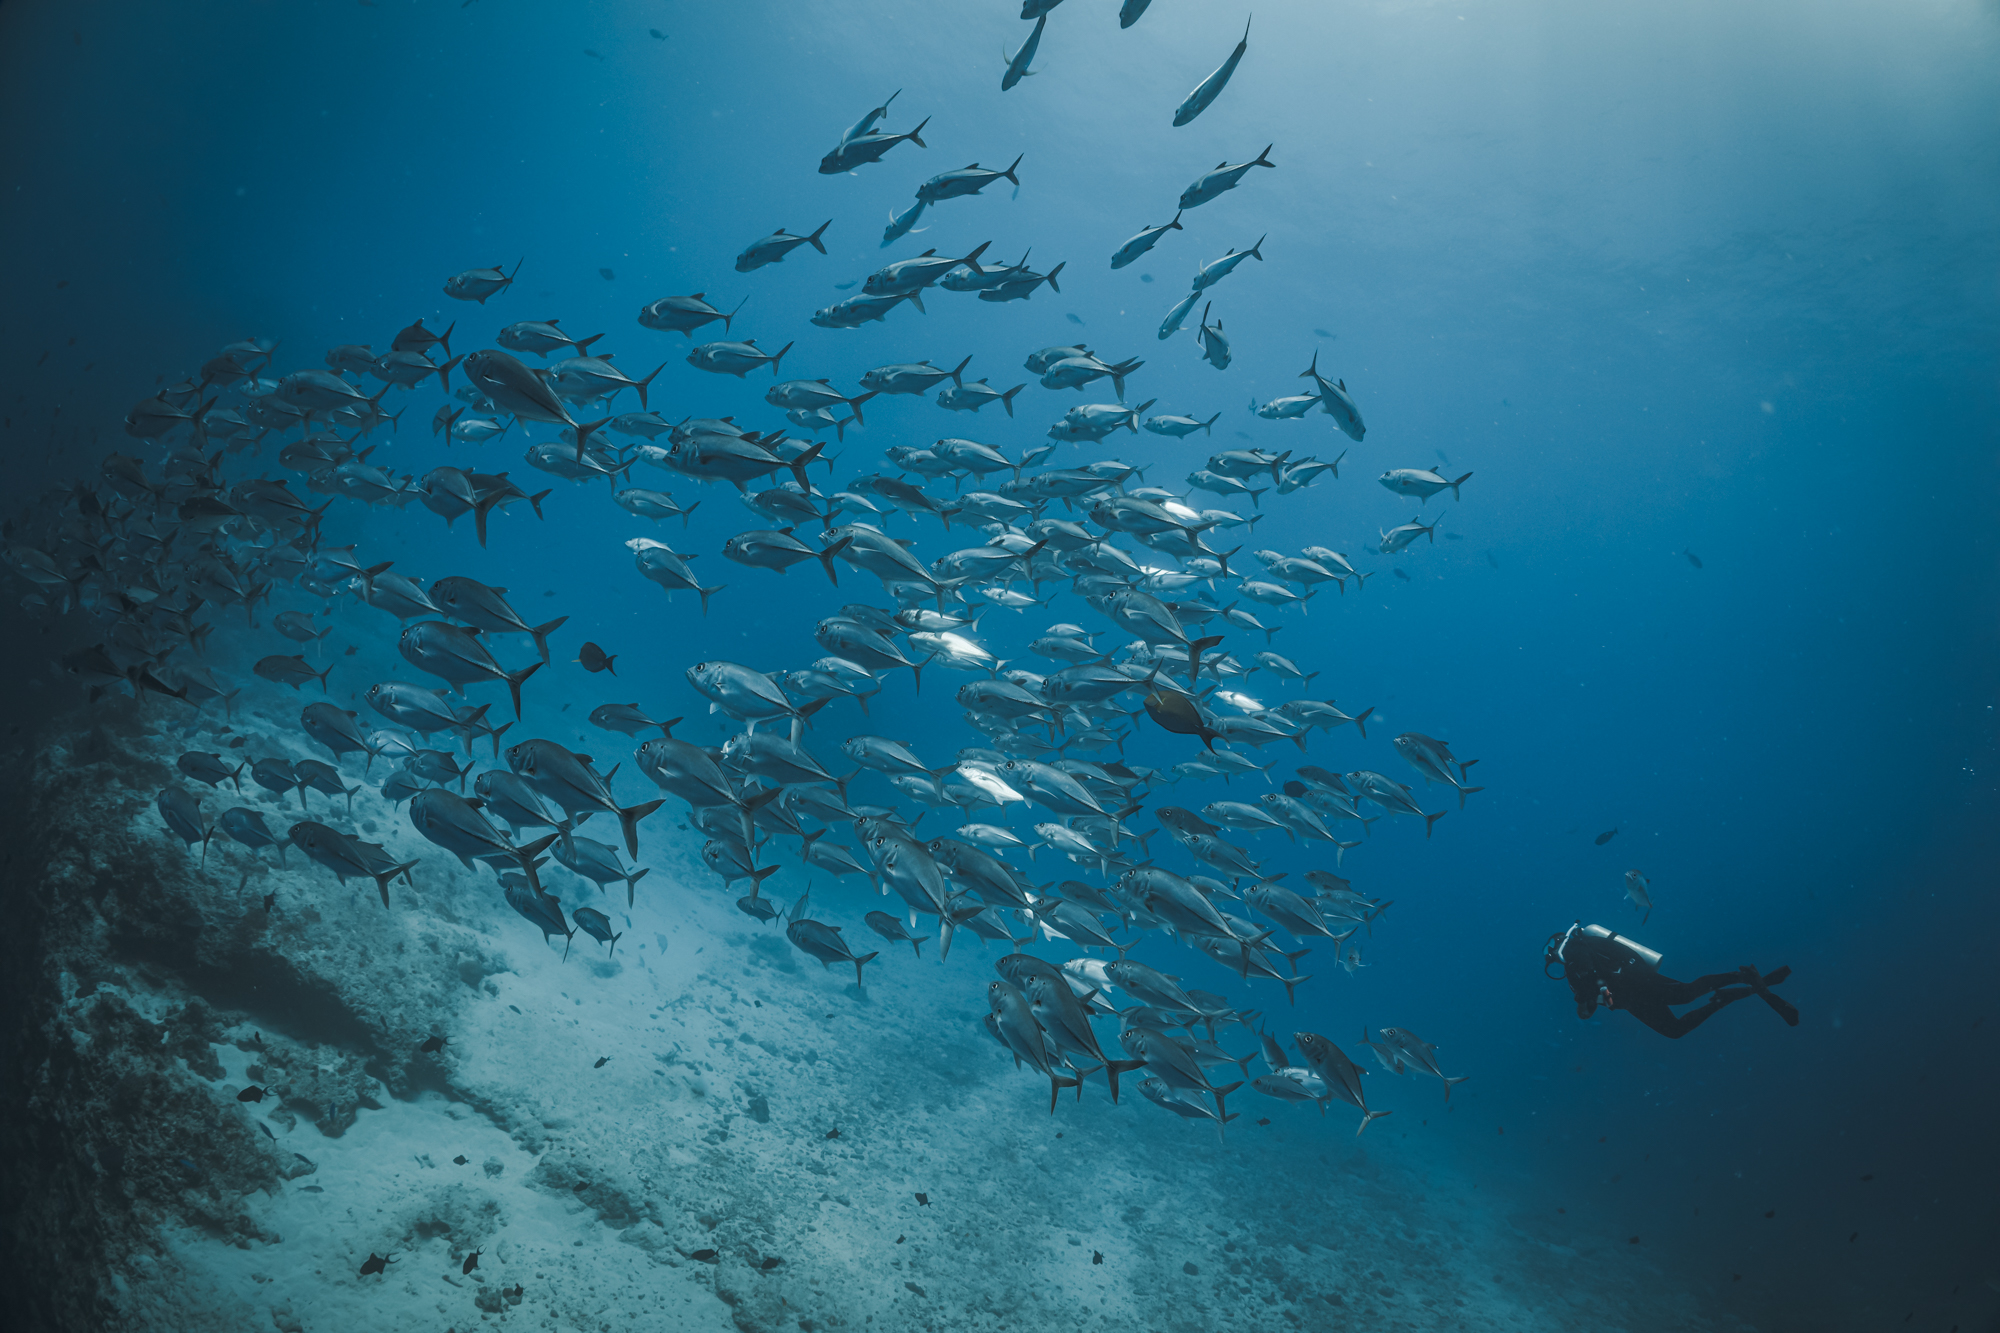 A diver swims into a school of fish in the Maldives